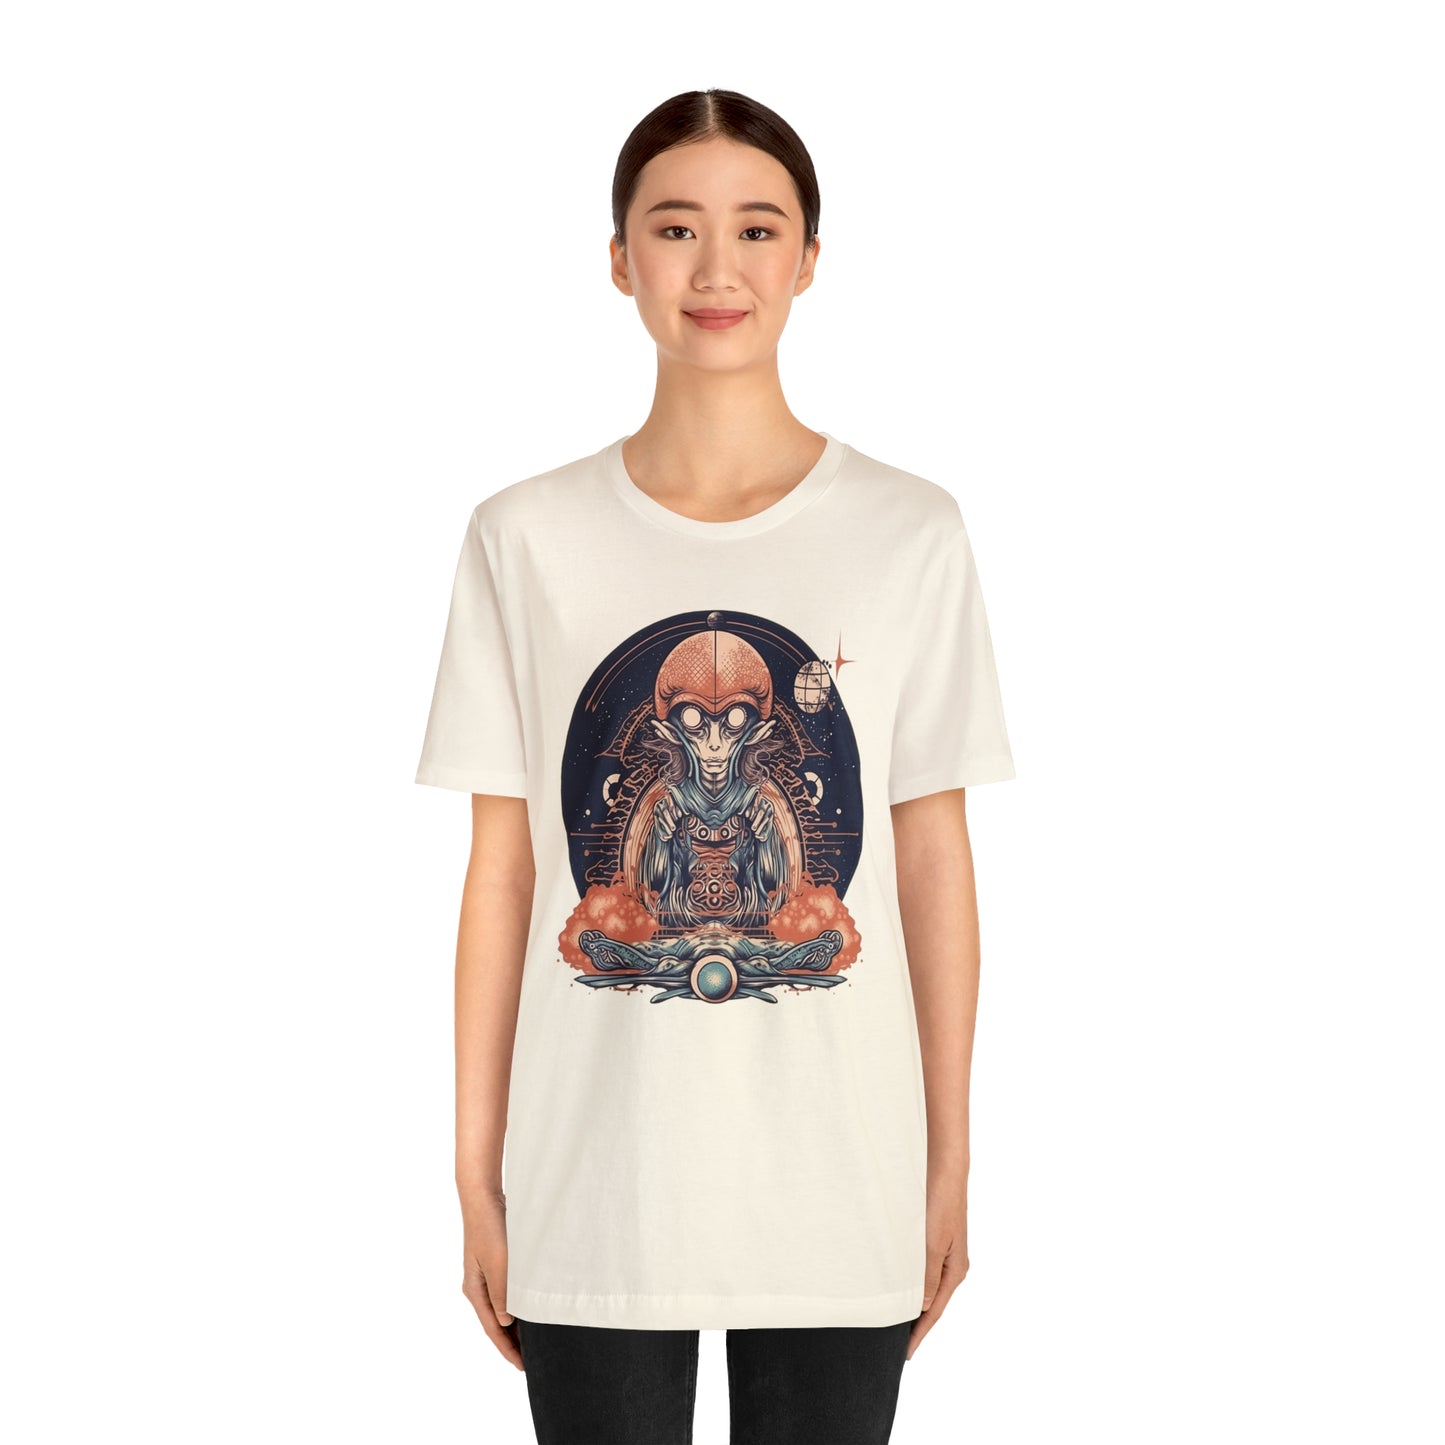 Alien Cosmic Galaxy T-Shirt | Explore Spiritual Awakening & Oneness